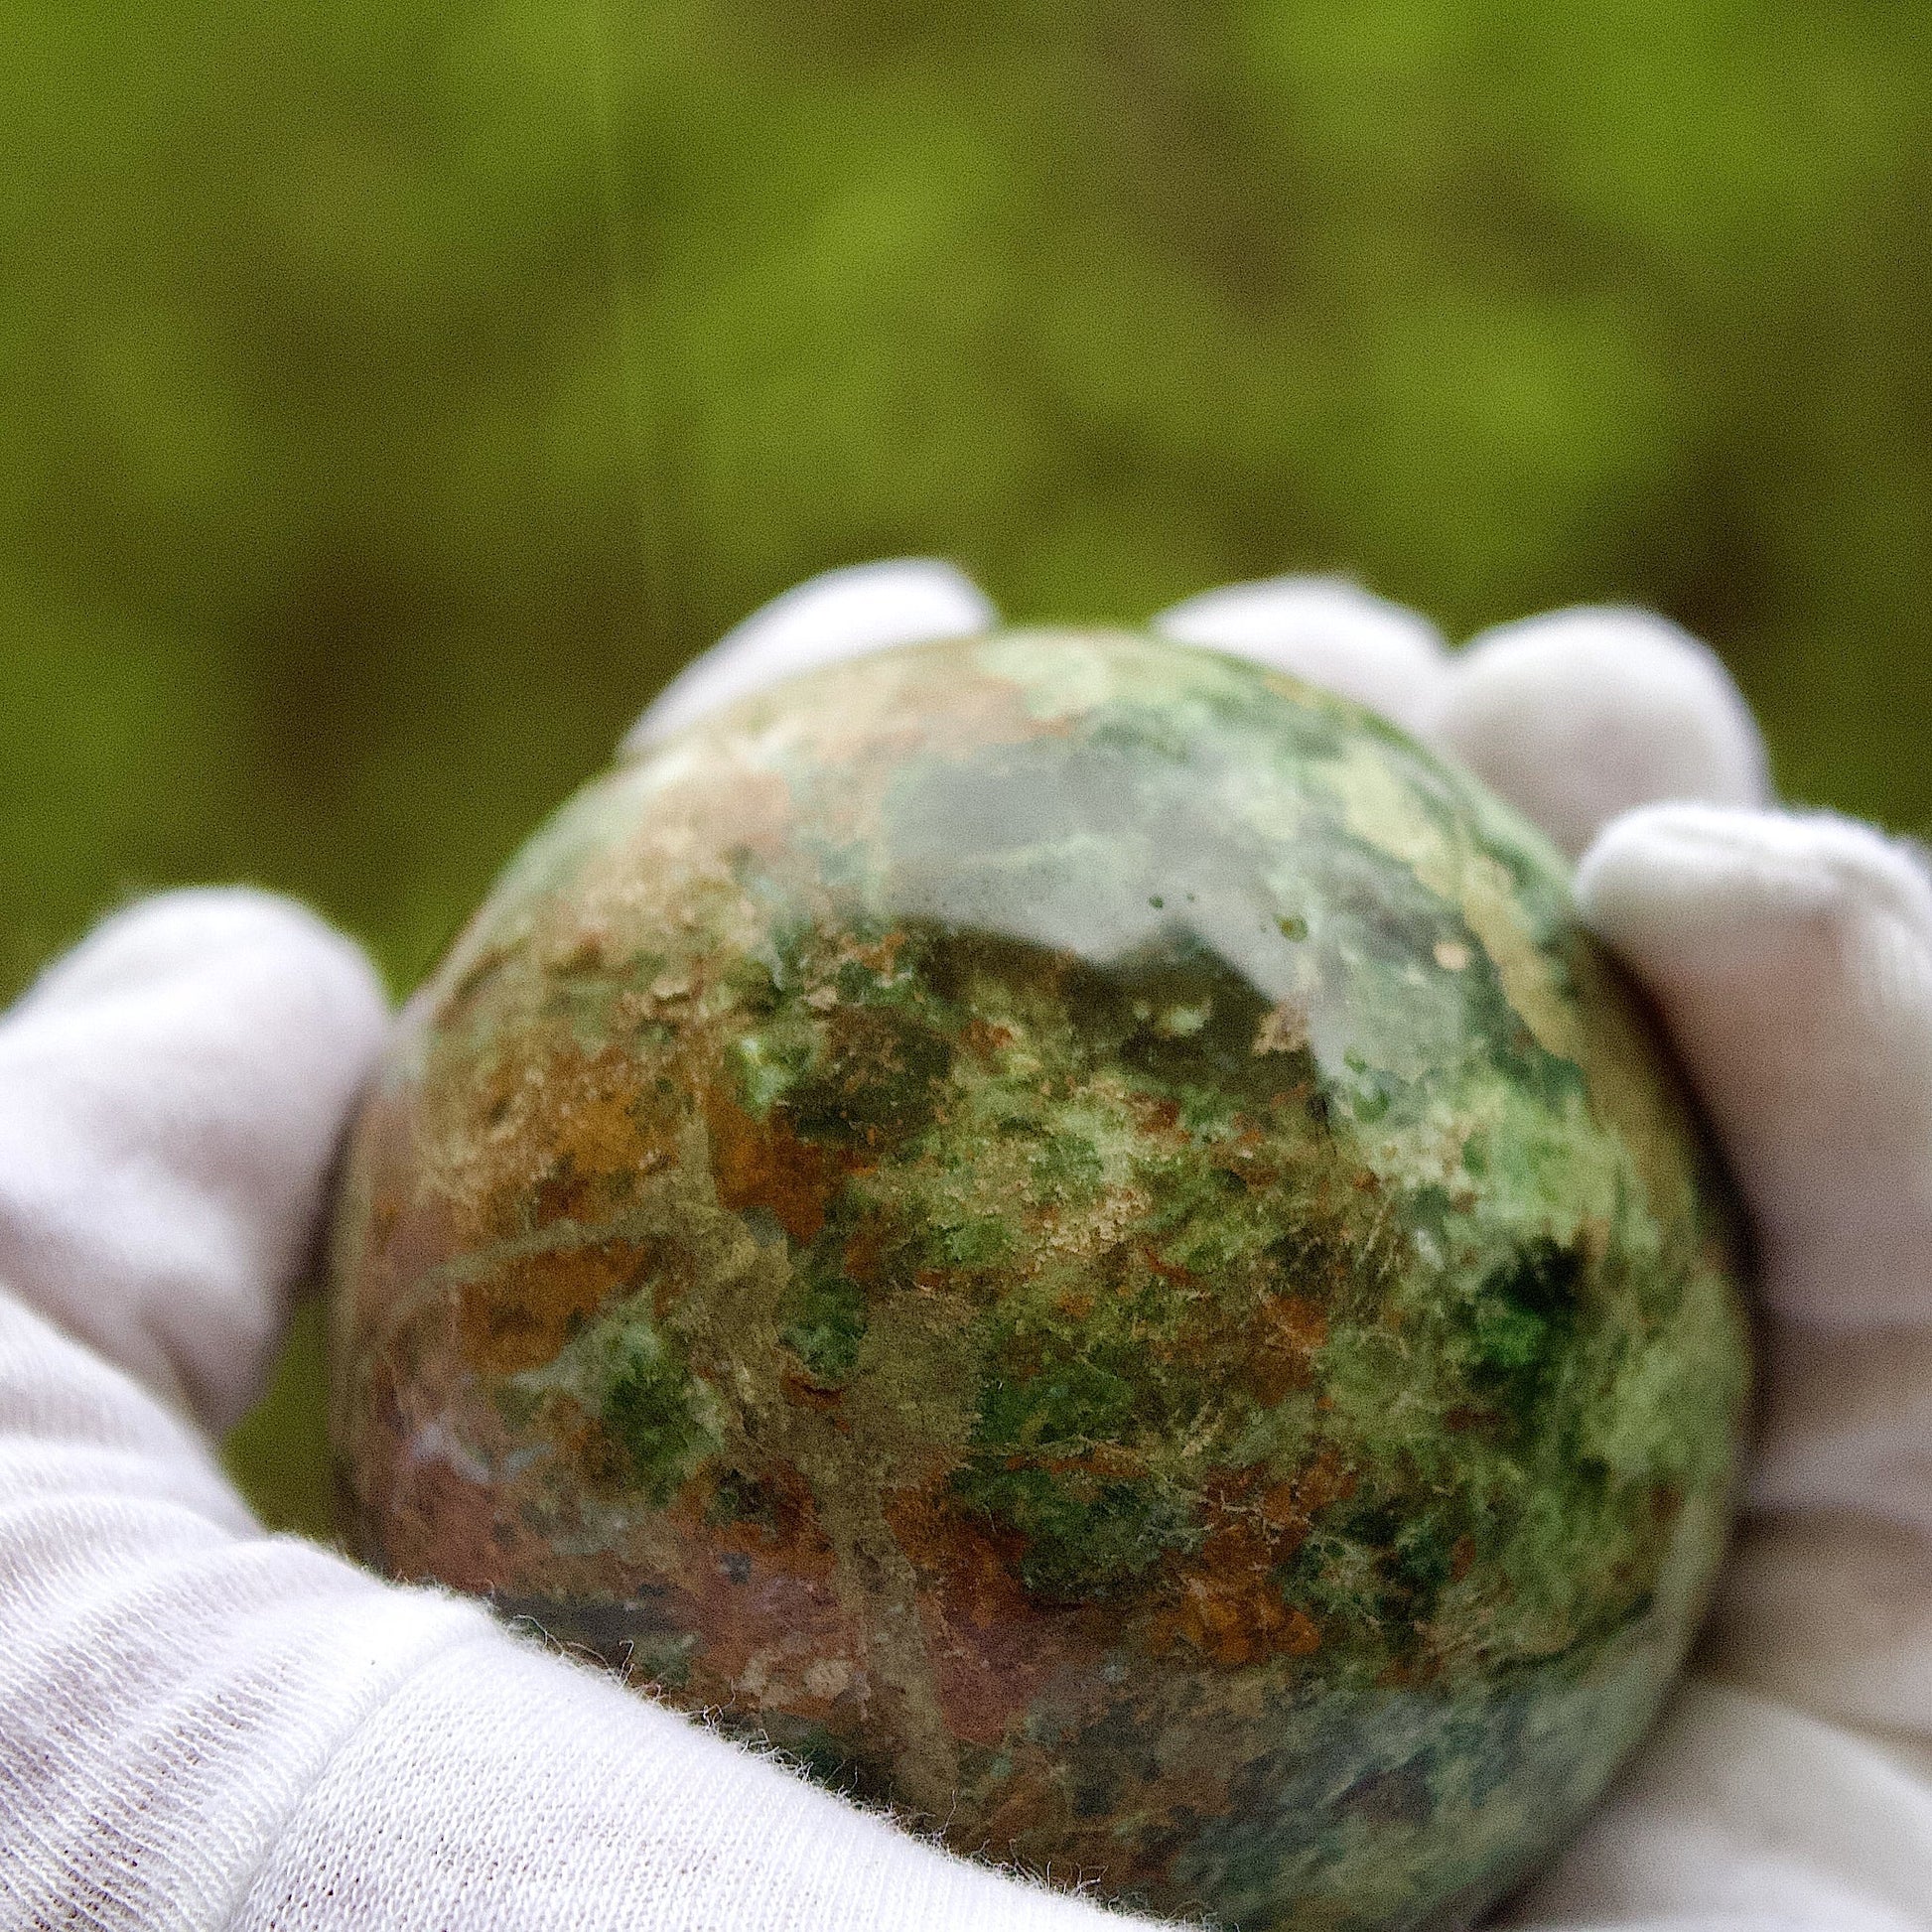 polished chrysoprase sphere